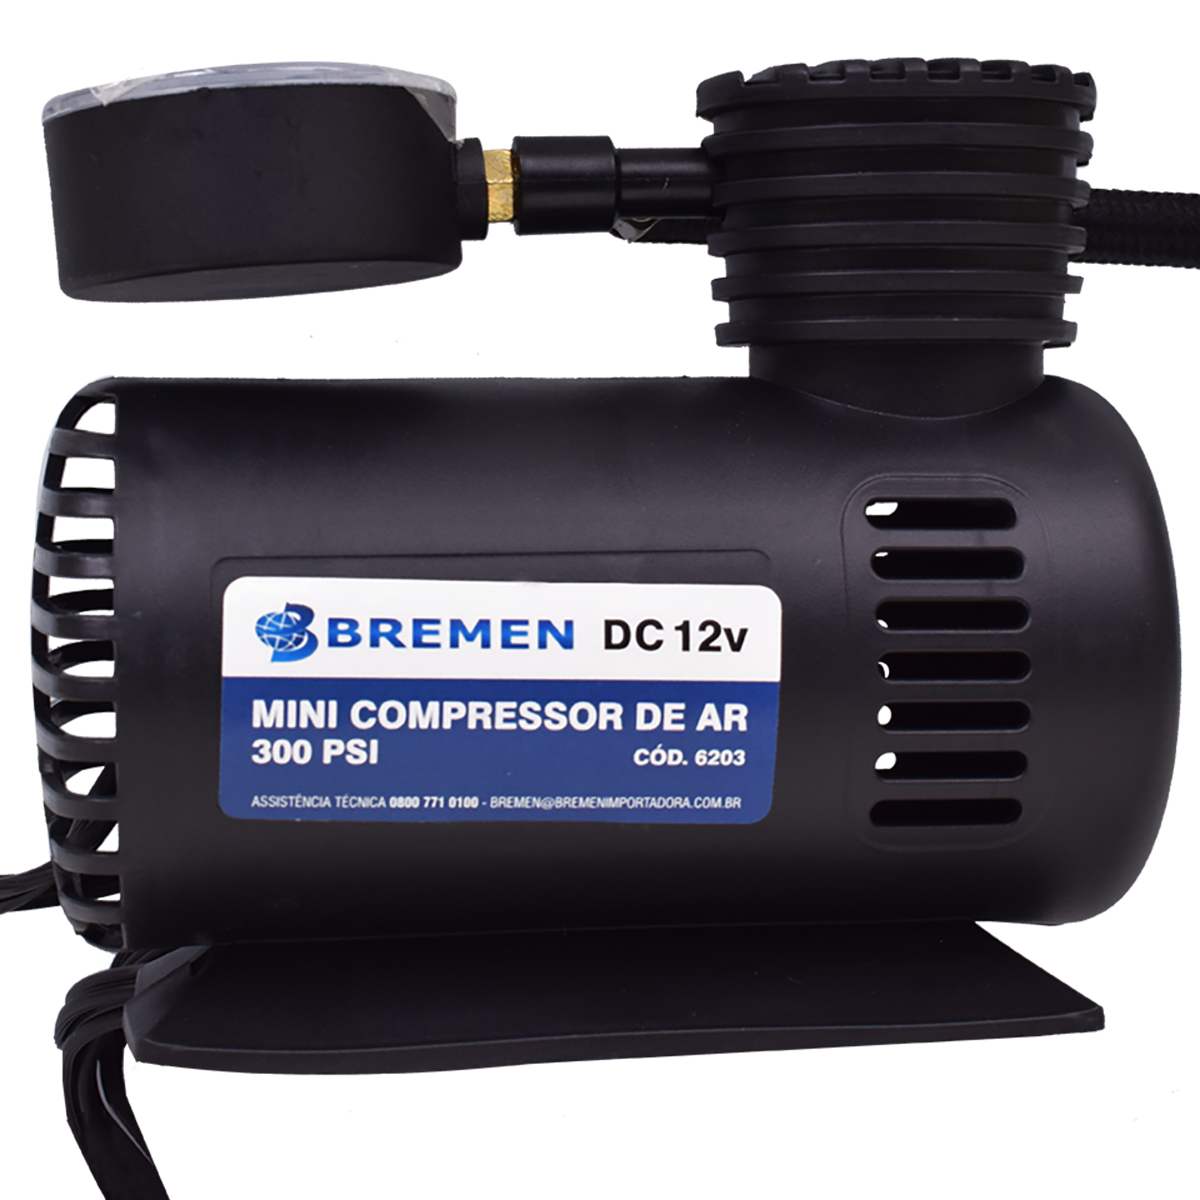 Mini Compressor em Polipropileno 12v 6203 Bremen